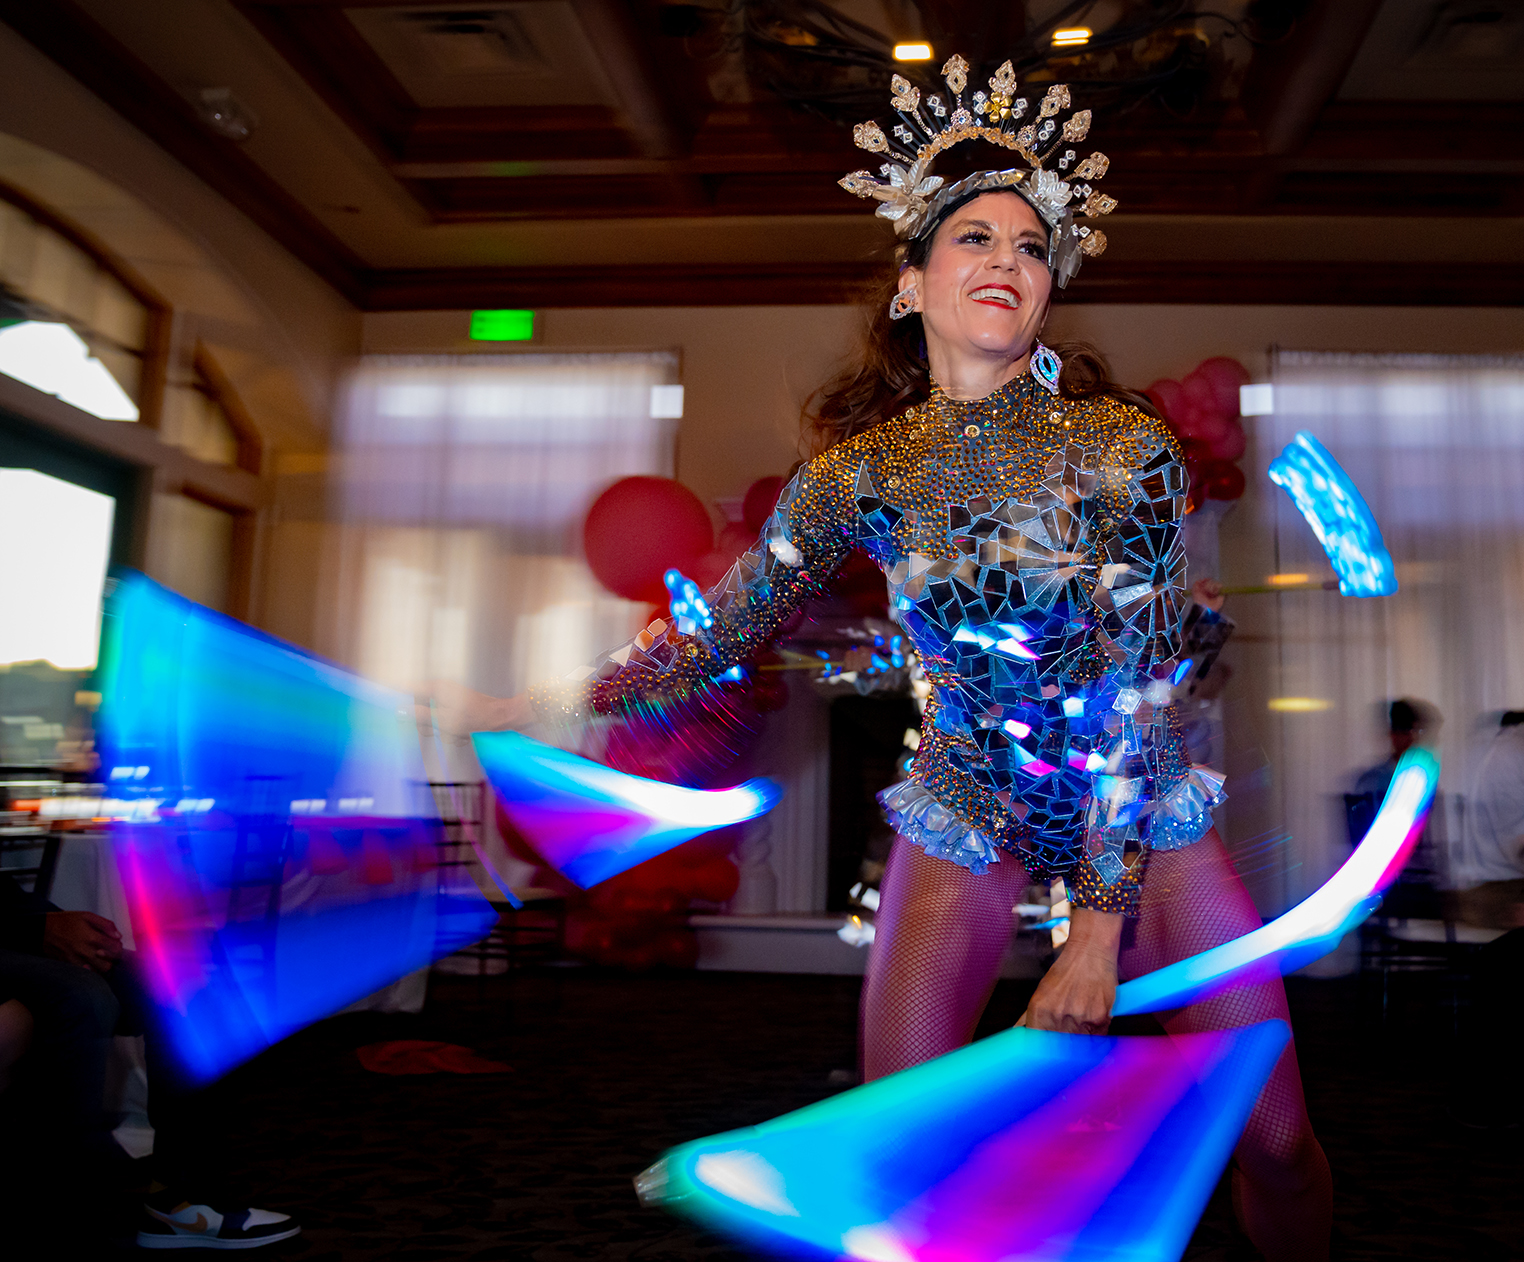 Mirror Dancer & LED 'glow go' dancer from Catalyst Arts in San Francisco 